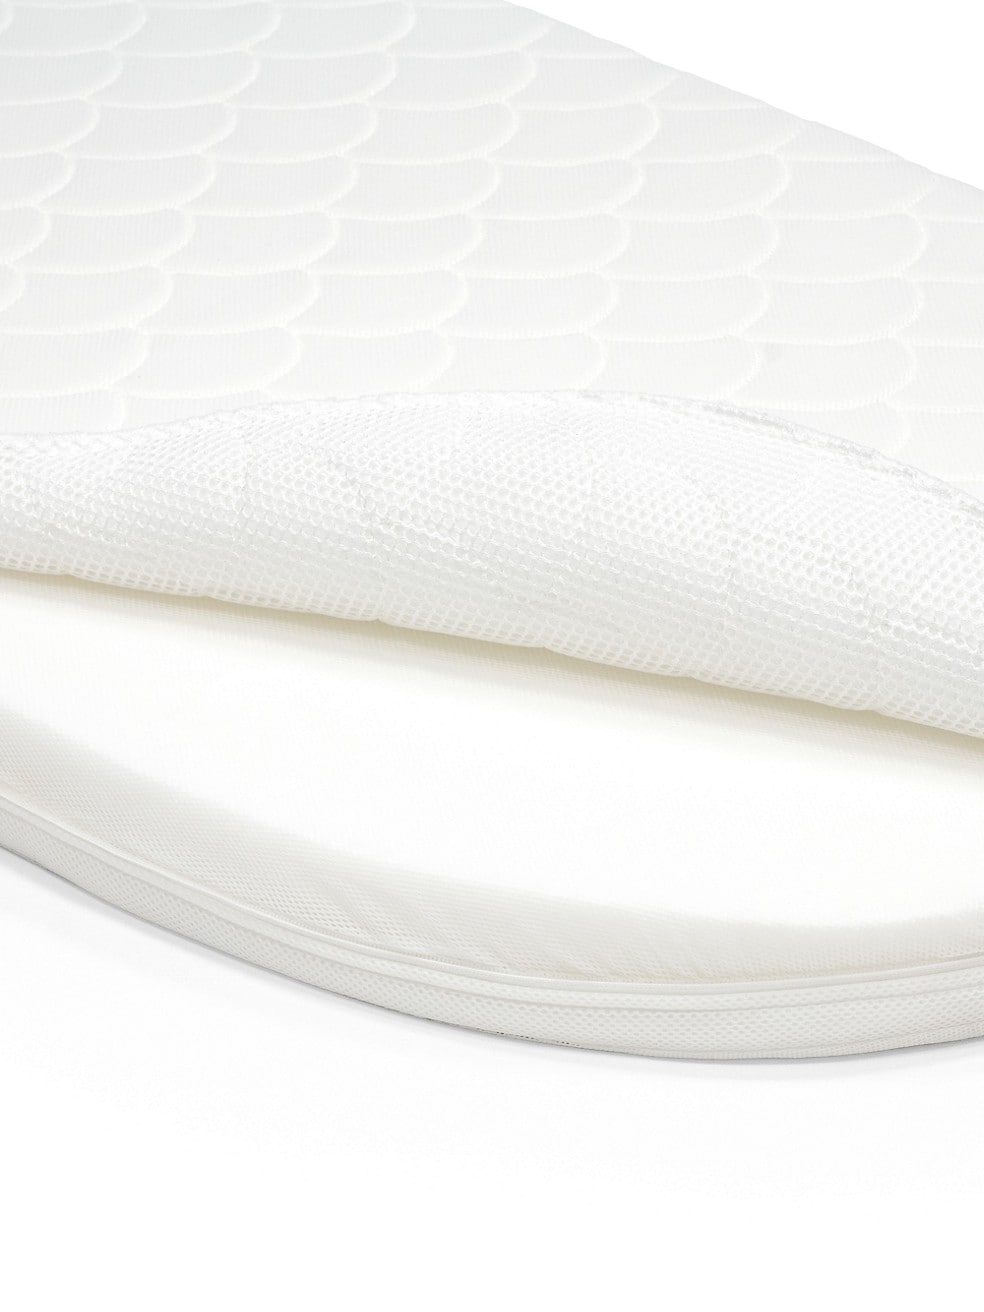 Stokke Sleepi Bed Mattress, White - ANB Baby -$100 - $300